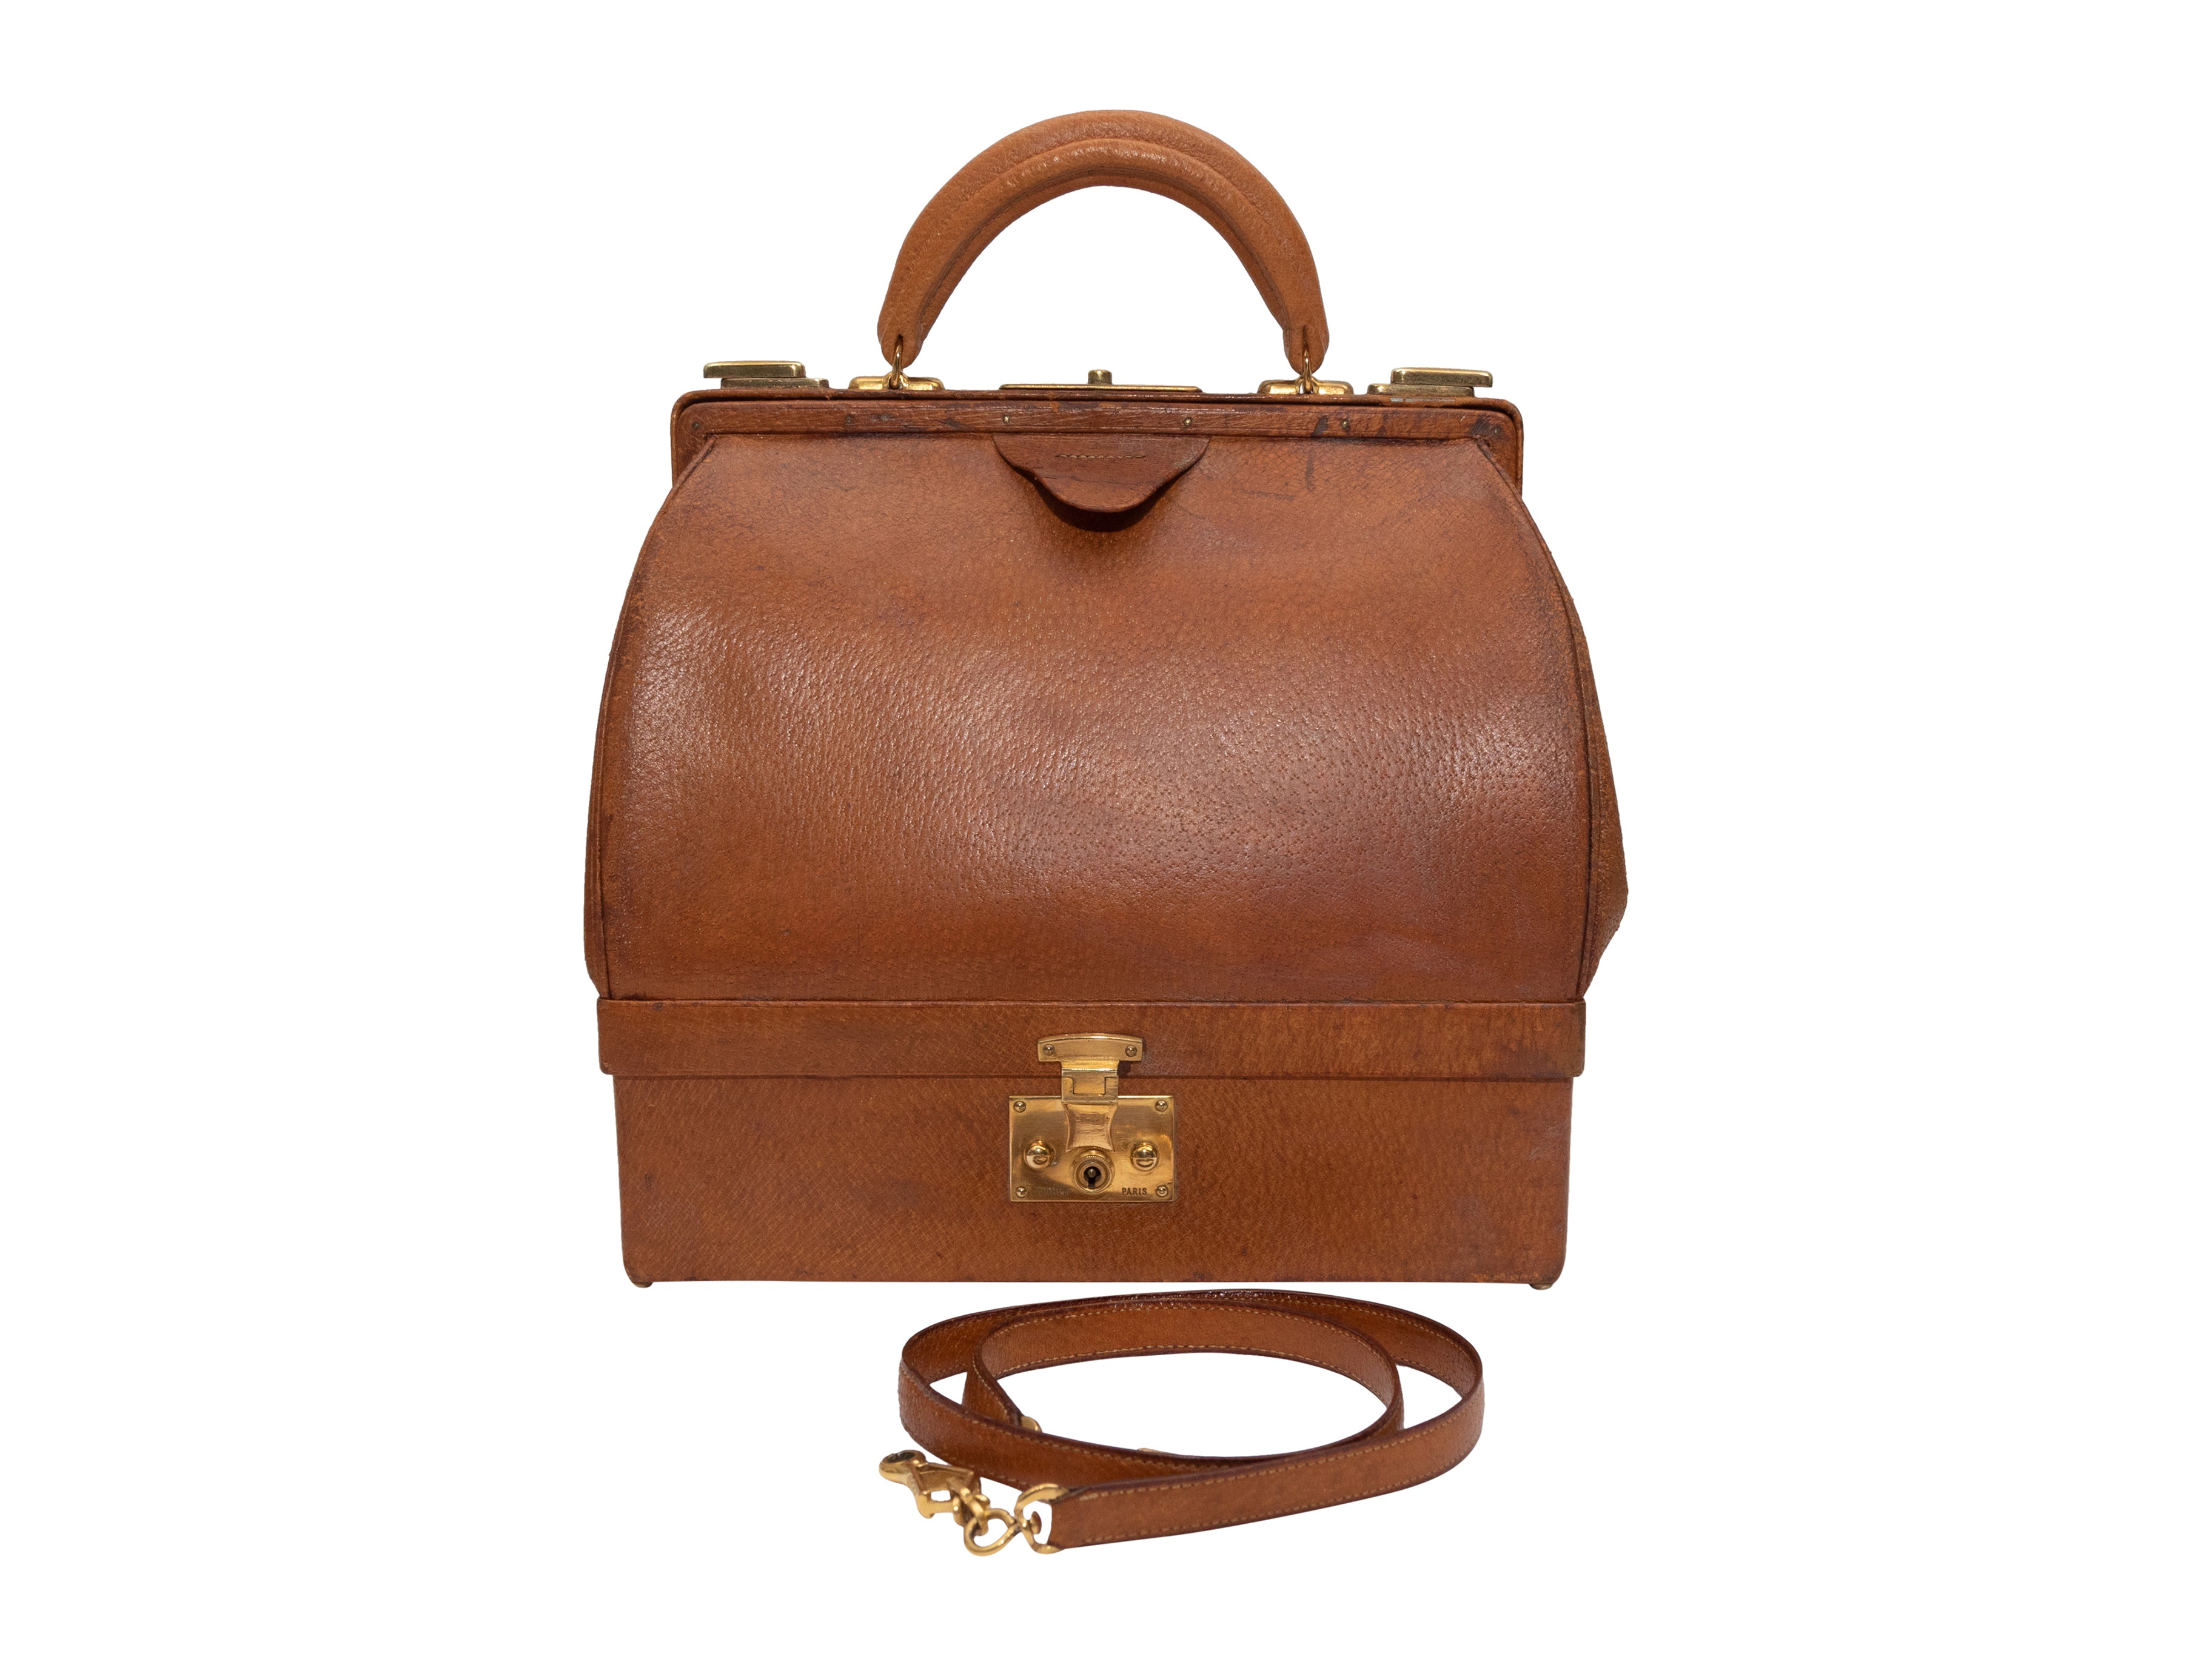 Vintage Tan Hermes Rare Sac Malette Bag, RvceShops Revival